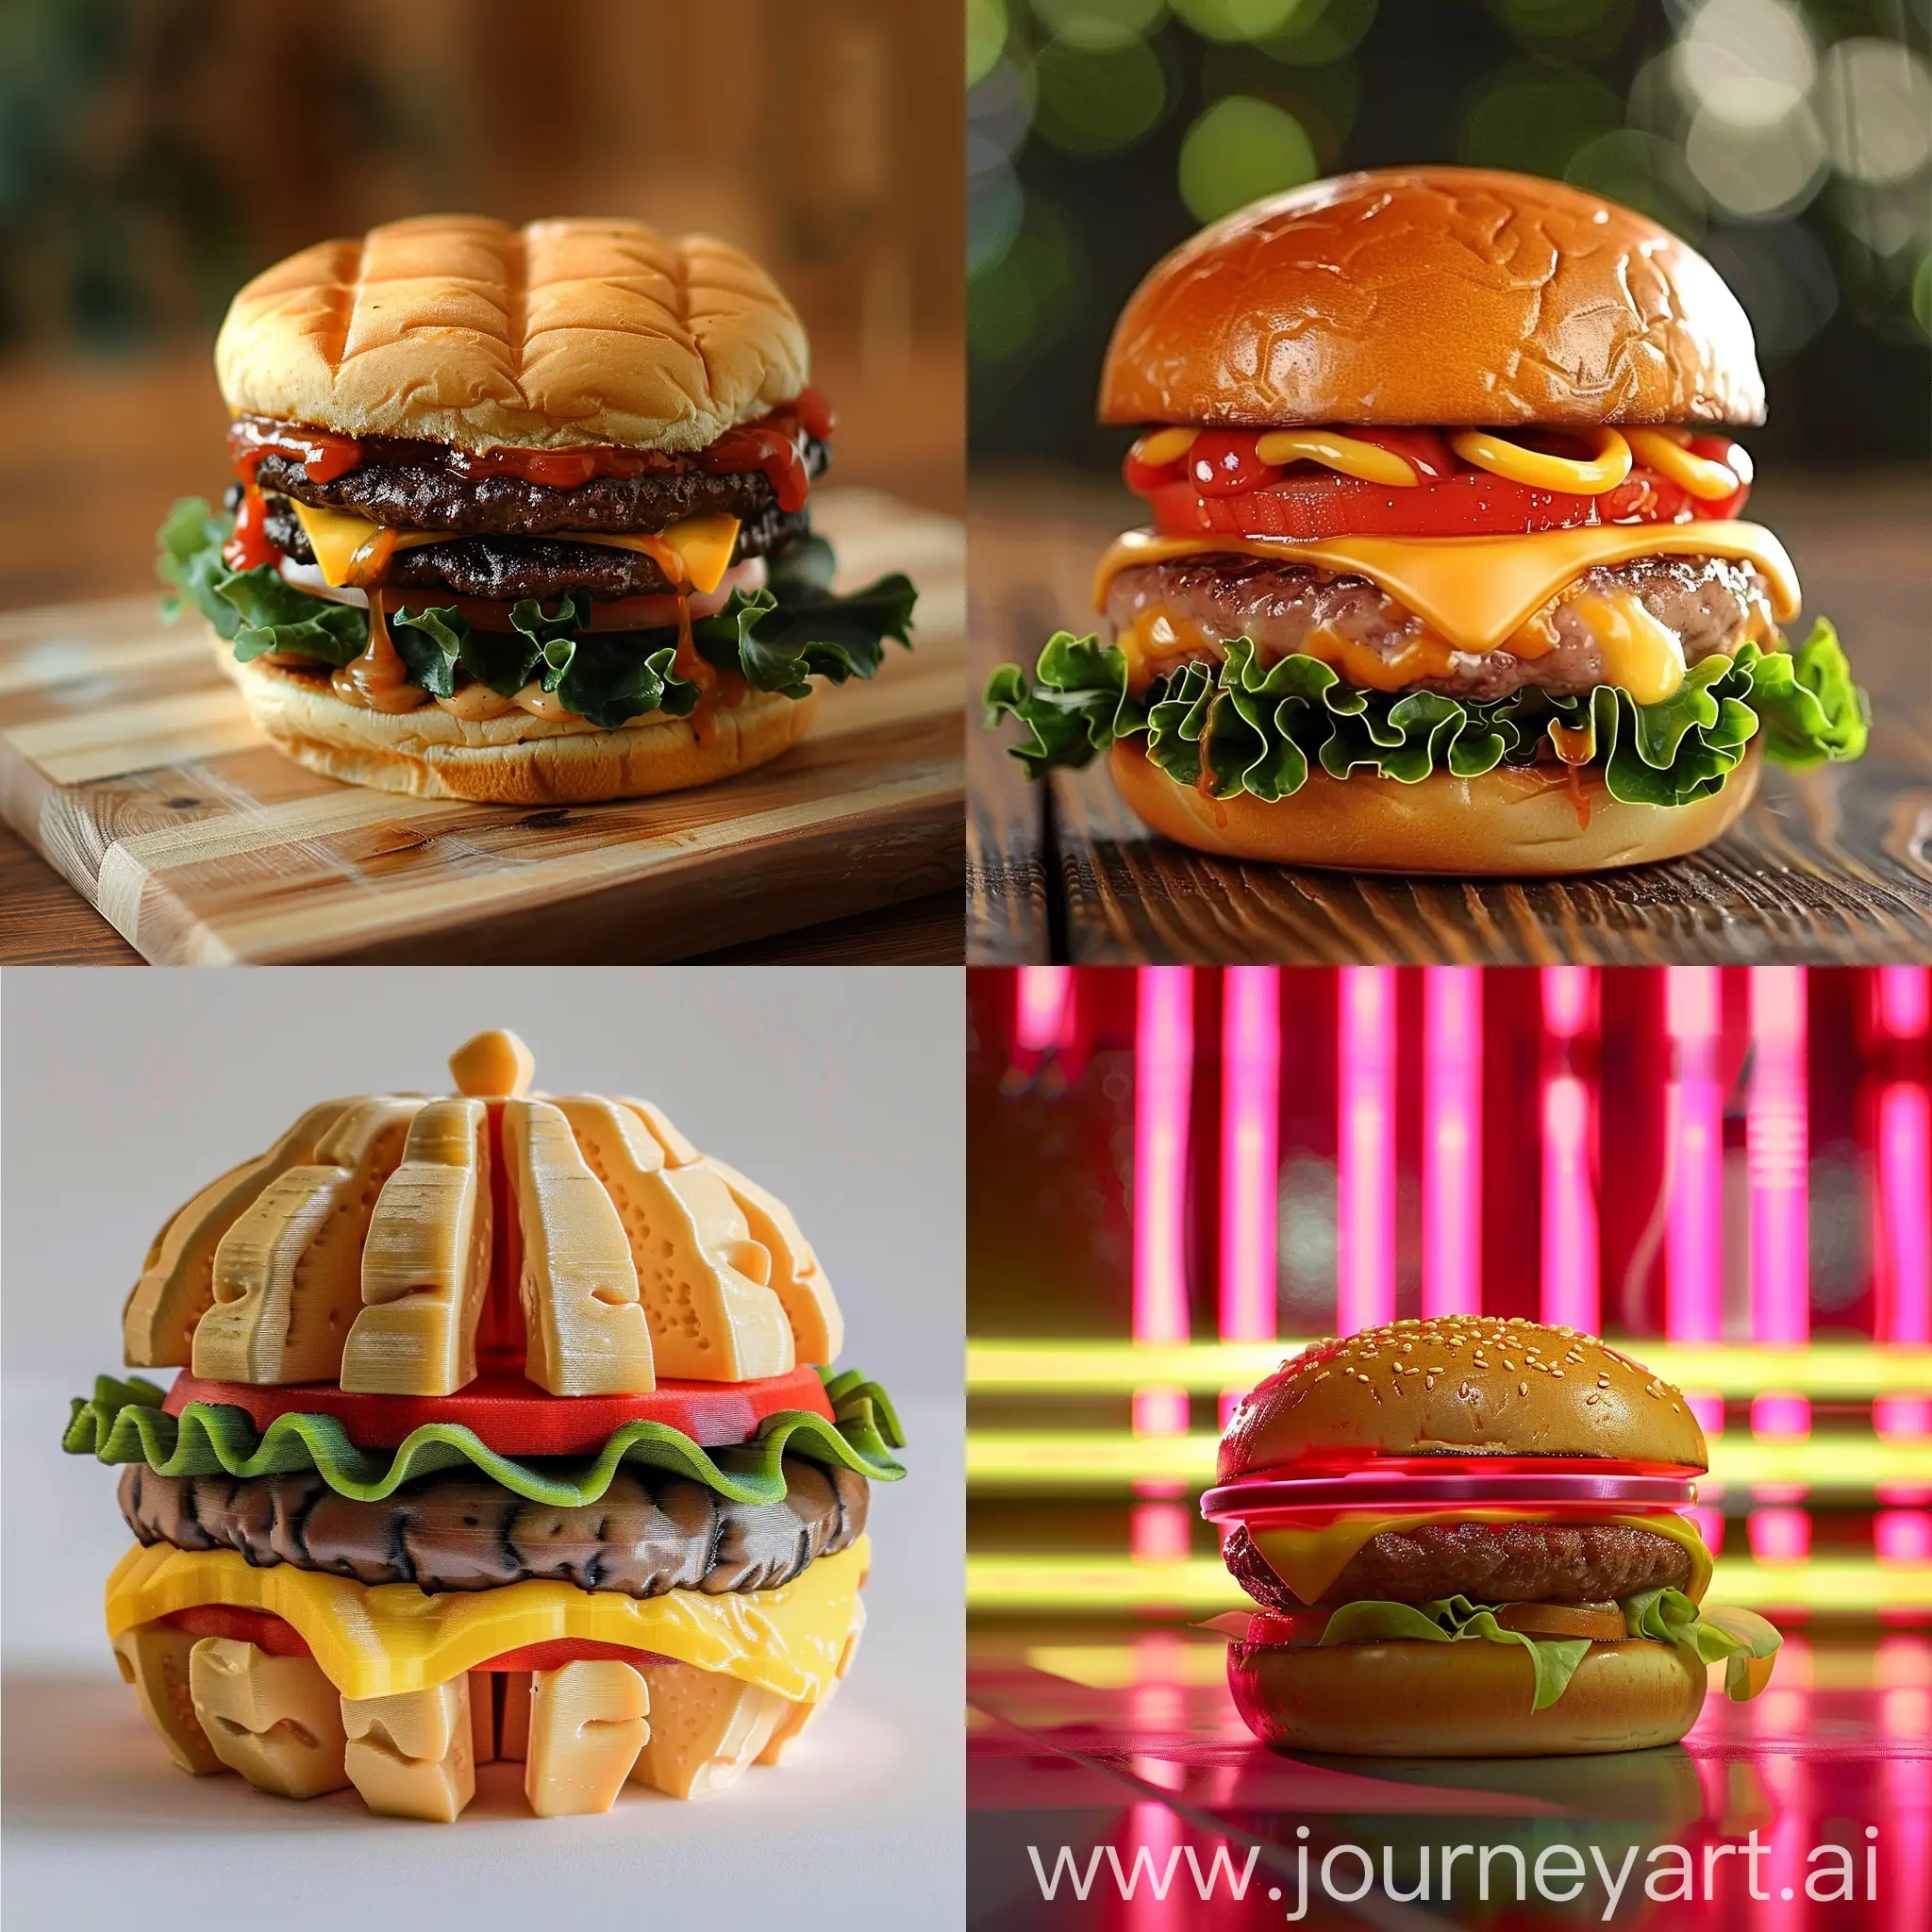 Futuristic-3DPrinted-Burger-CuttingEdge-Culinary-Creation